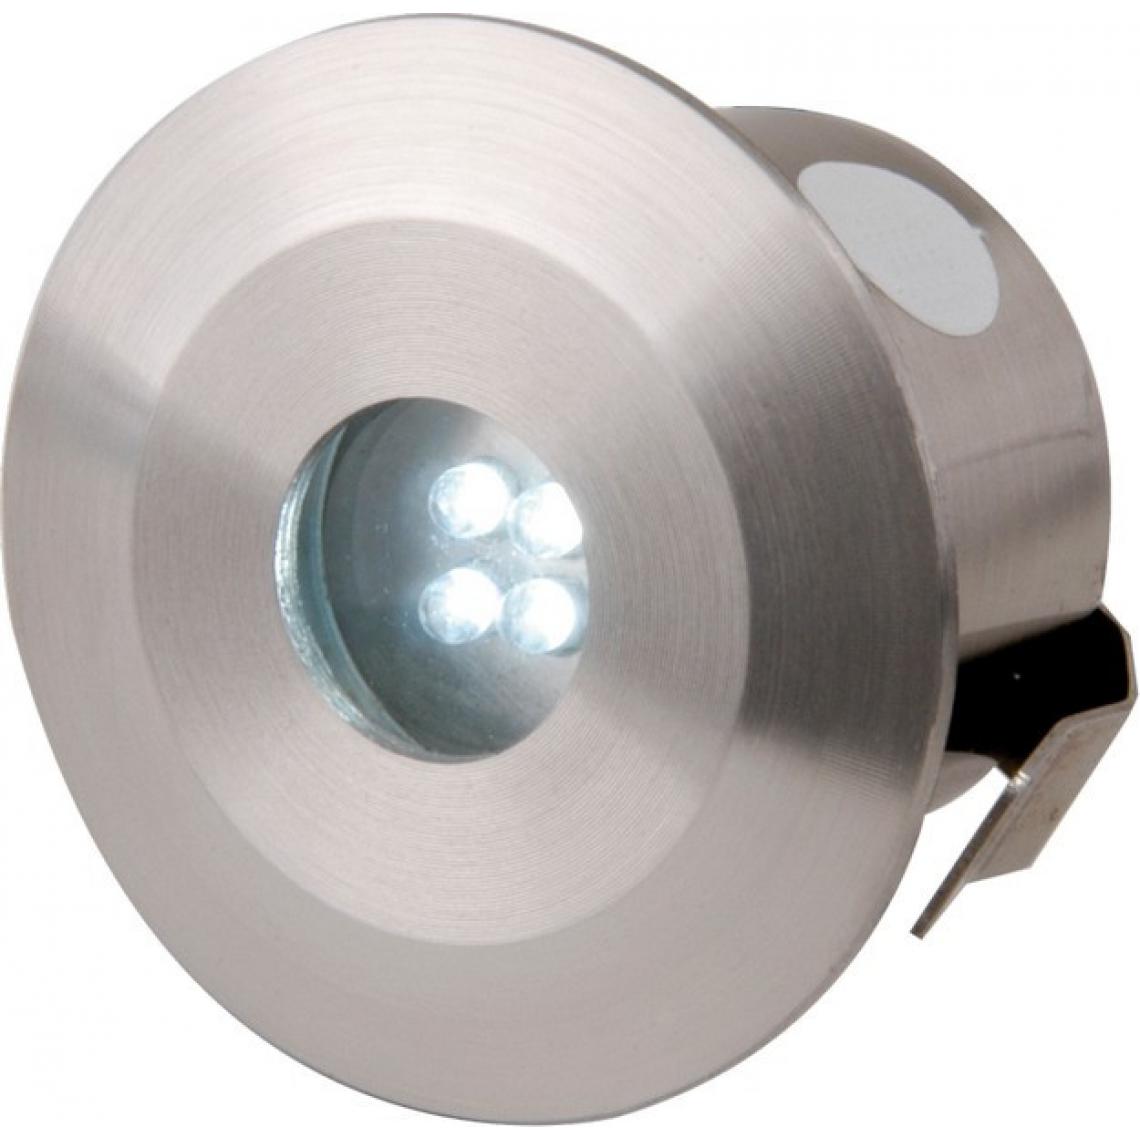 KNIGHTSBRIDGE - Kit LED en acier inoxydable 4 LED blanches de 0,5 W, IP44 - Lampadaire